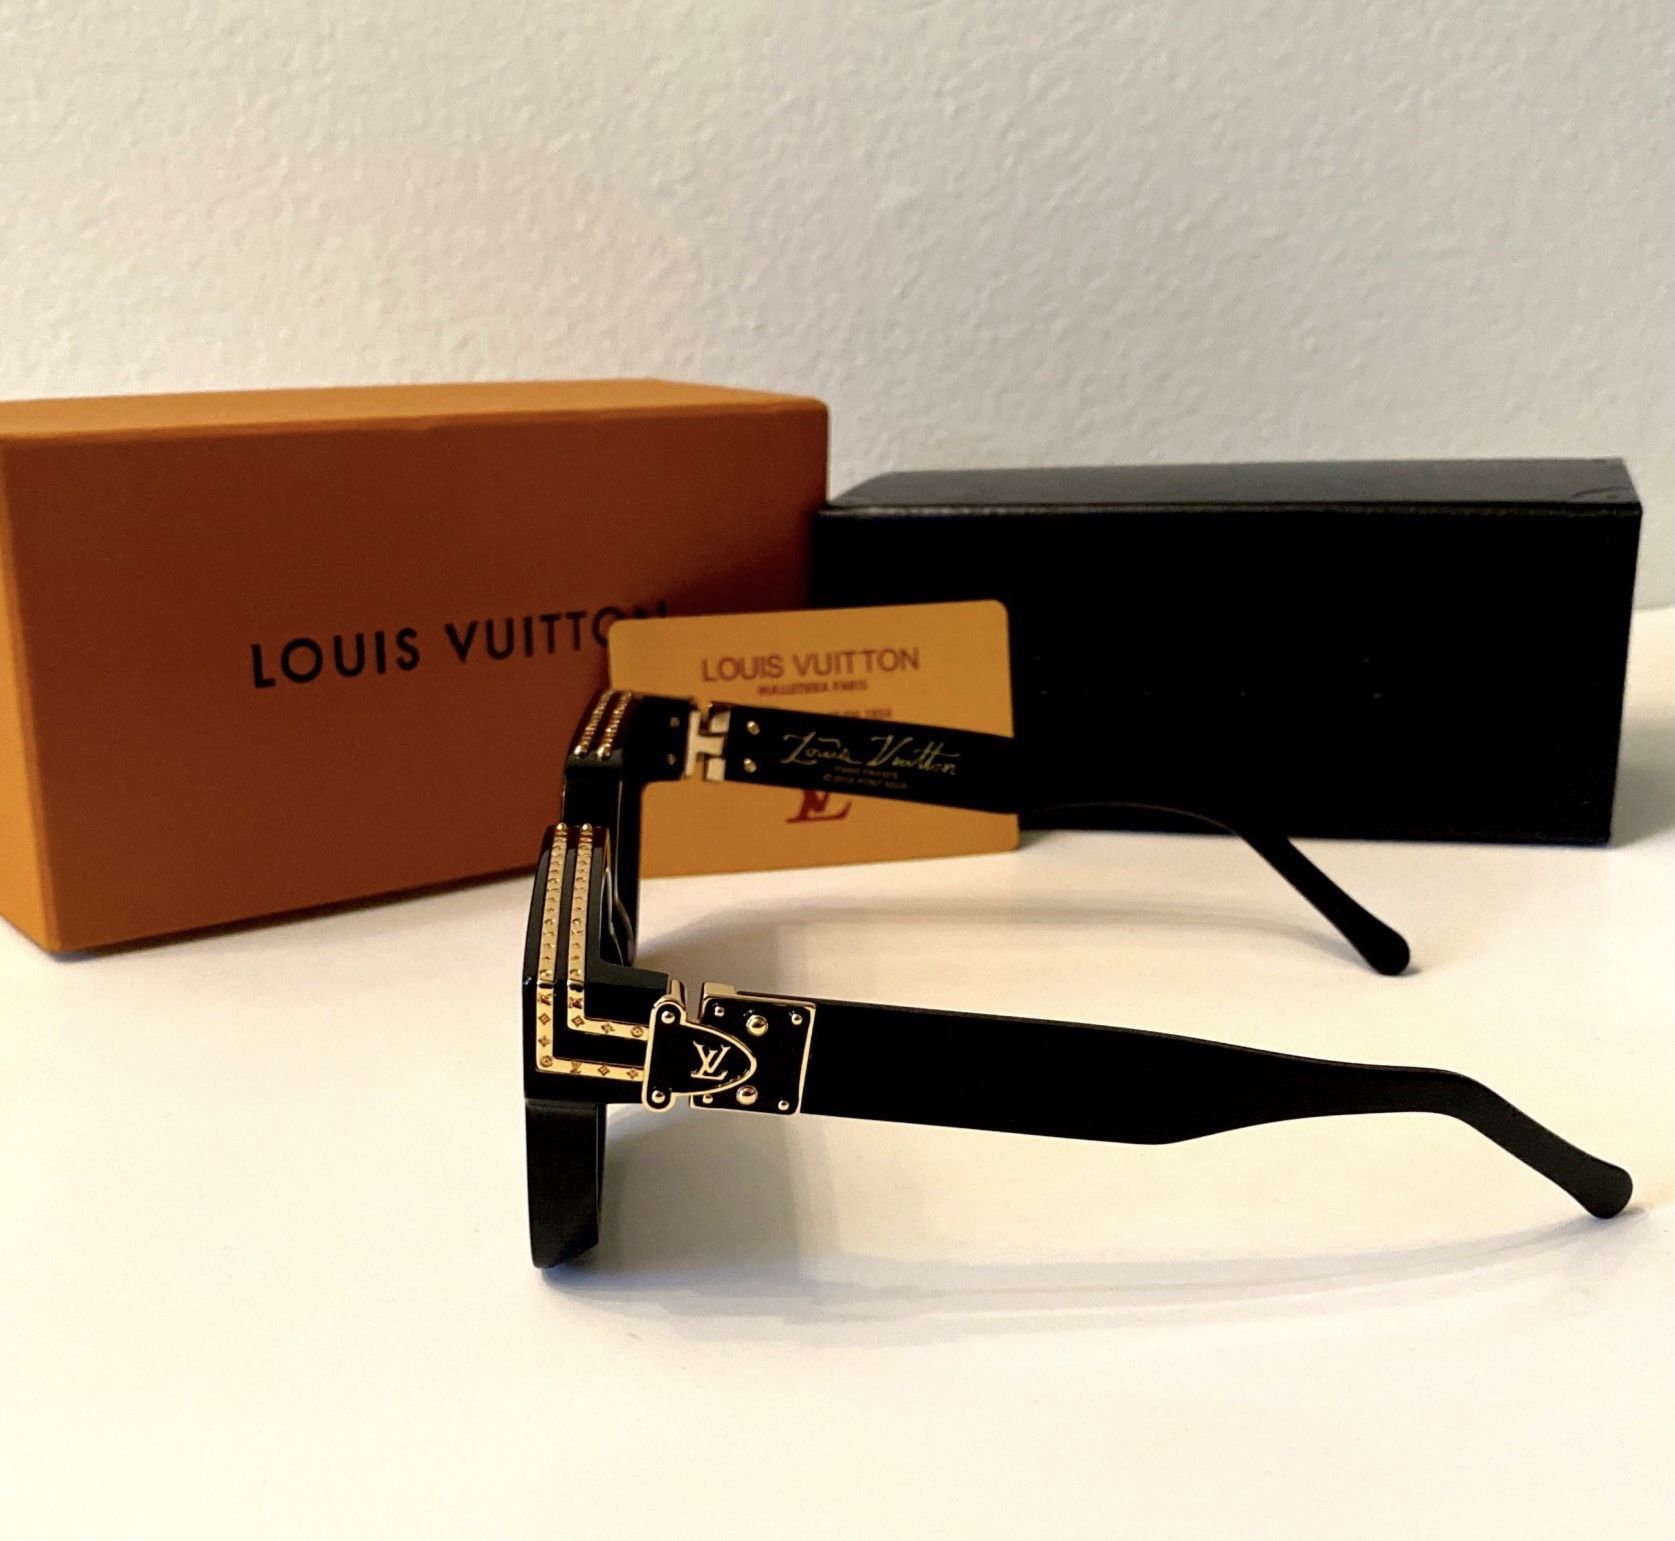 Authentic Louis Vuitton Women's sunglasses for Sale in Norwalk, CA - OfferUp